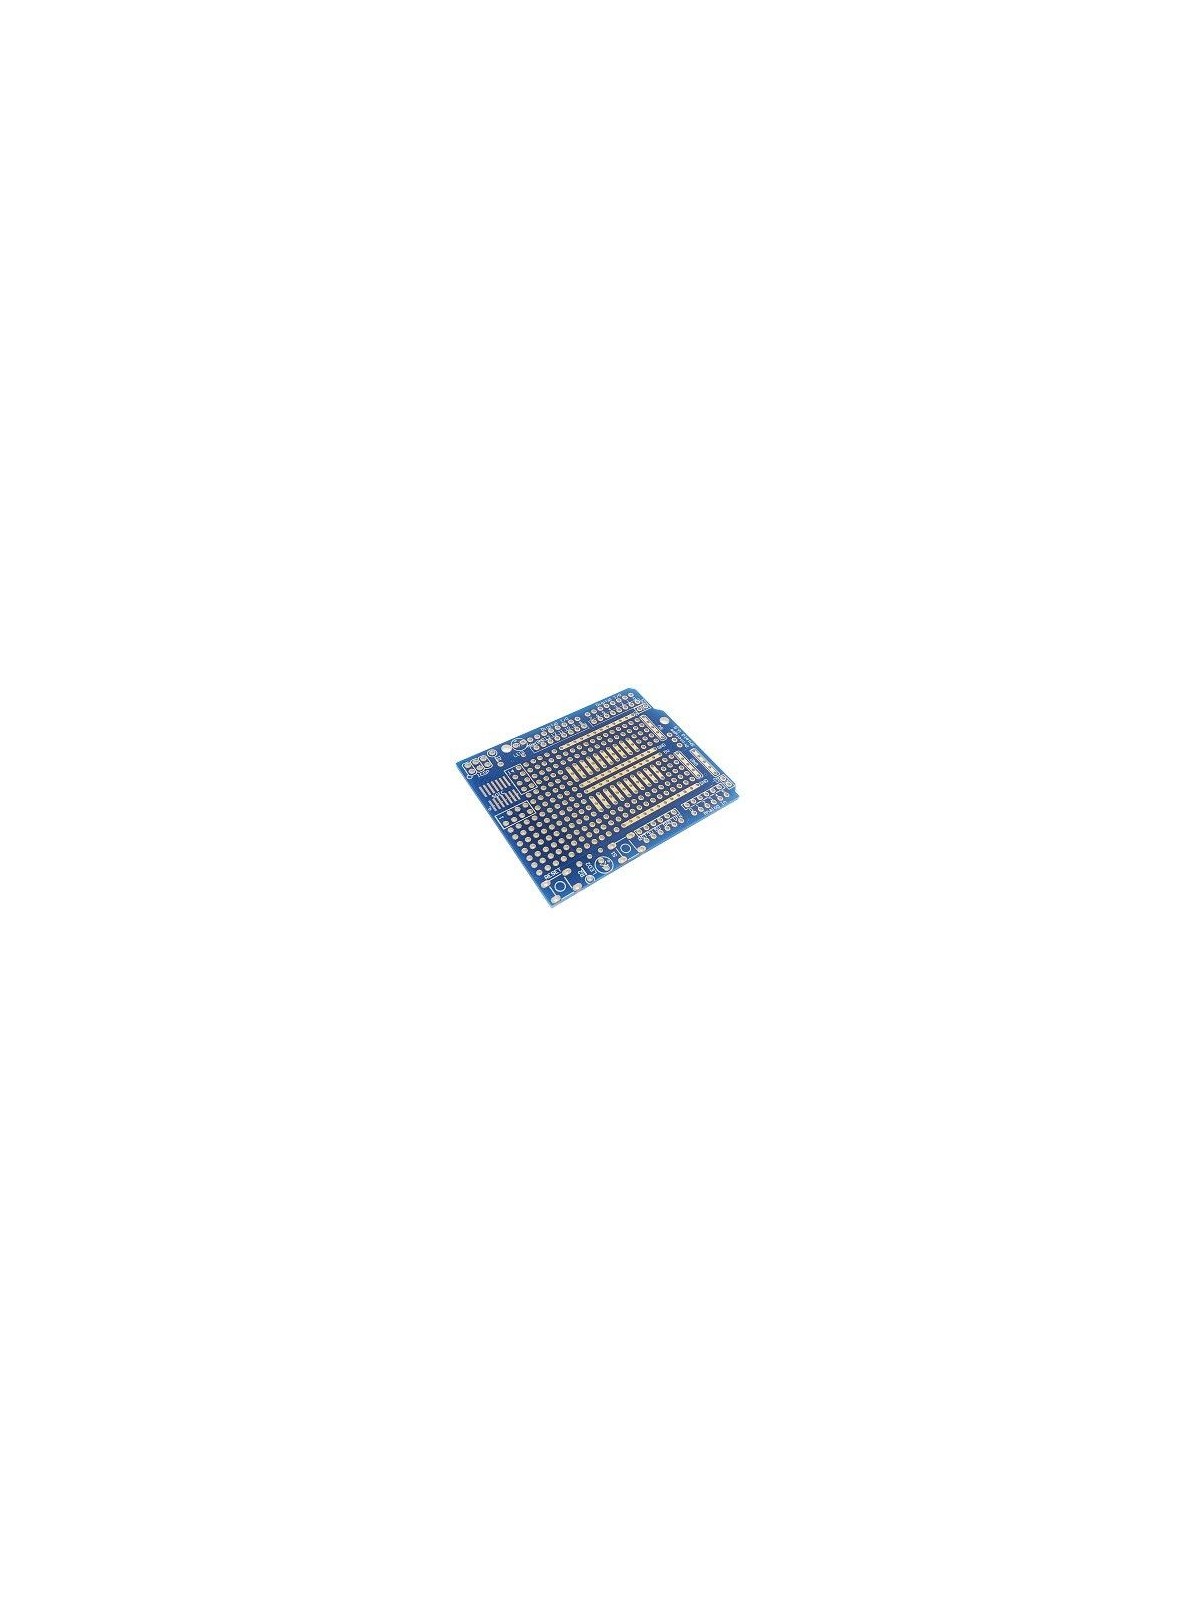 PCB para crear shields para Arduino UNO - Microlog